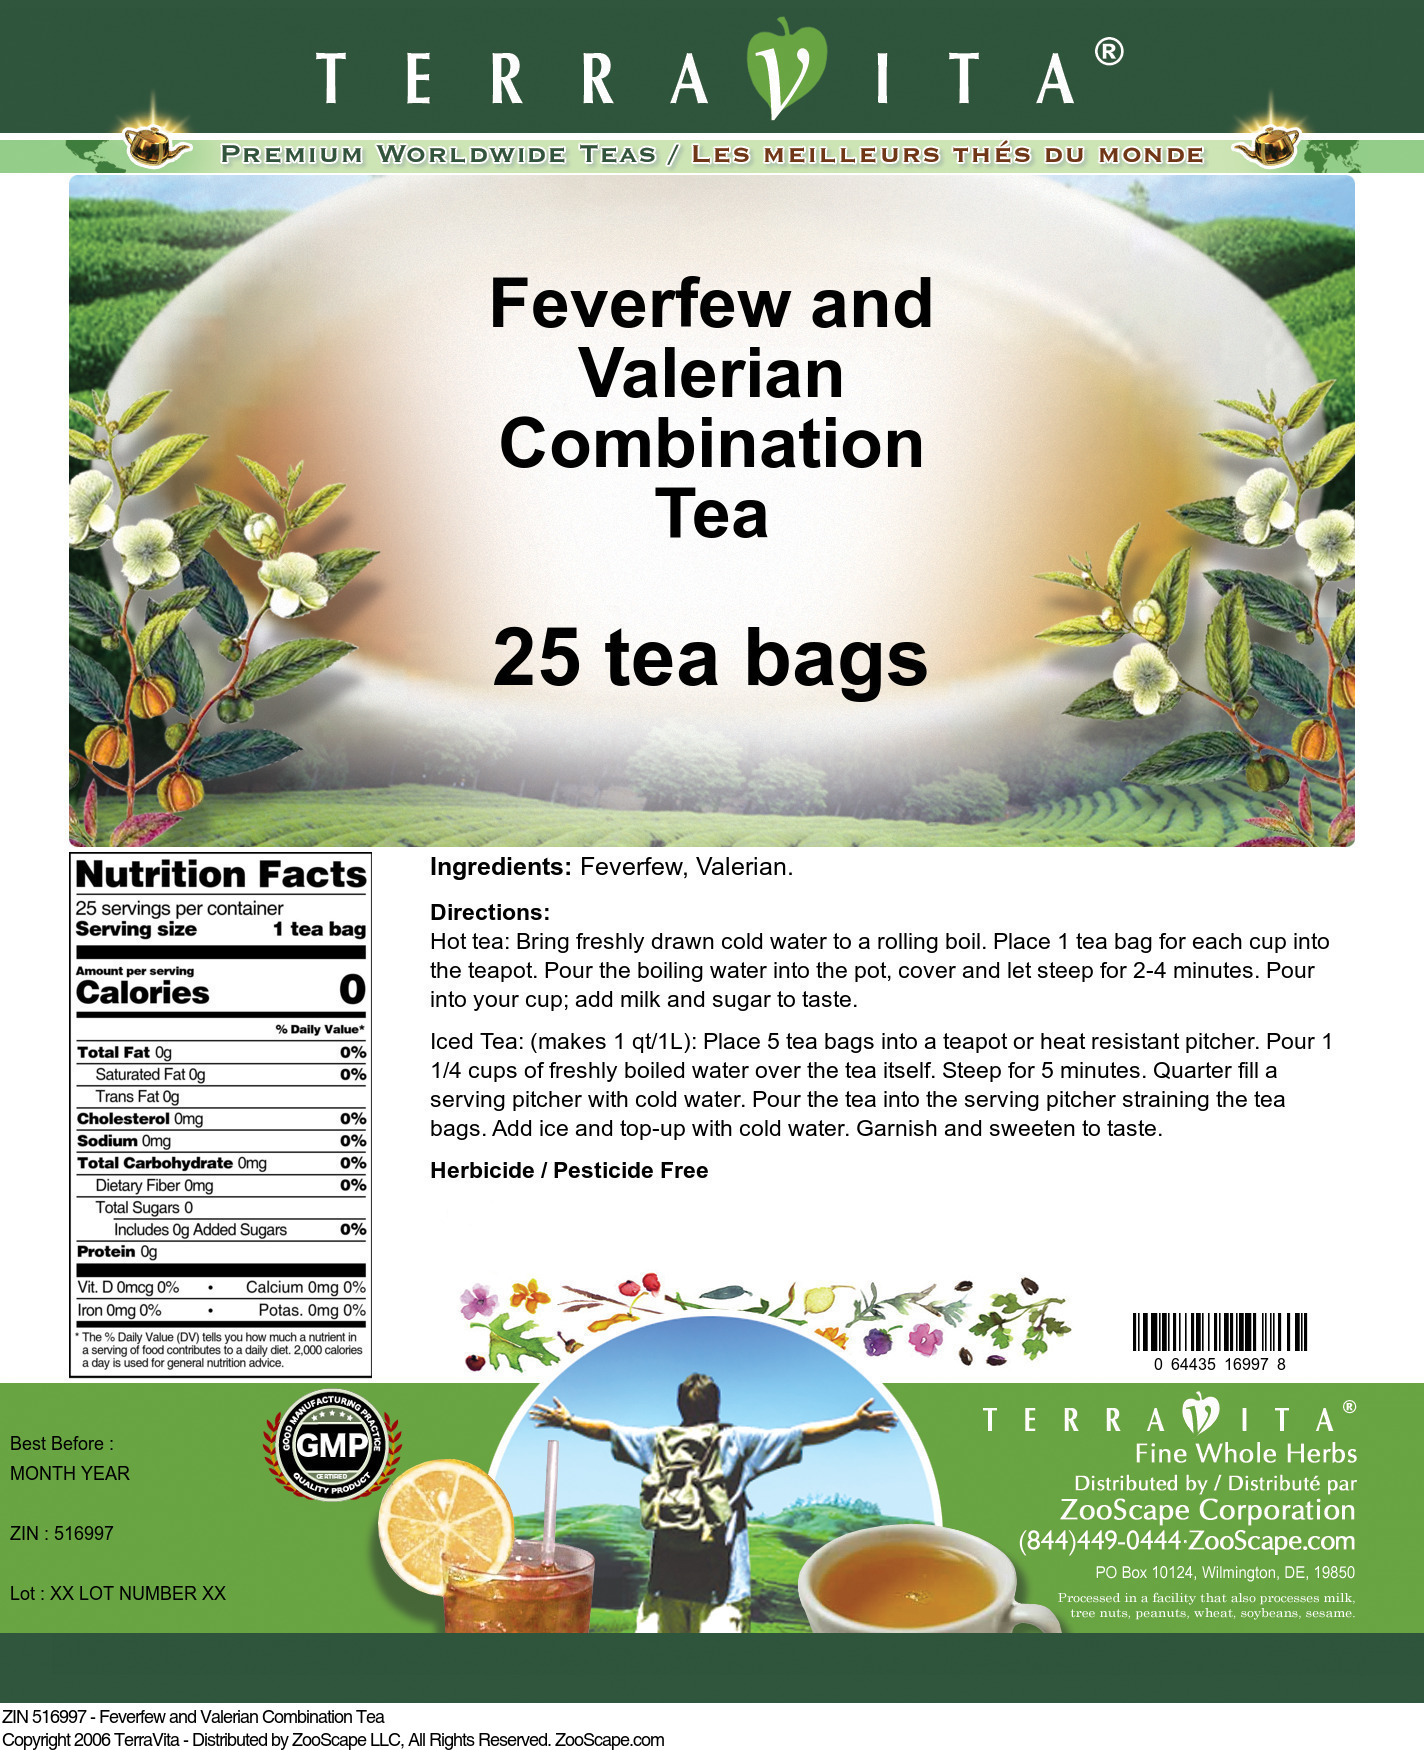 Feverfew and Valerian Combination Tea - Label